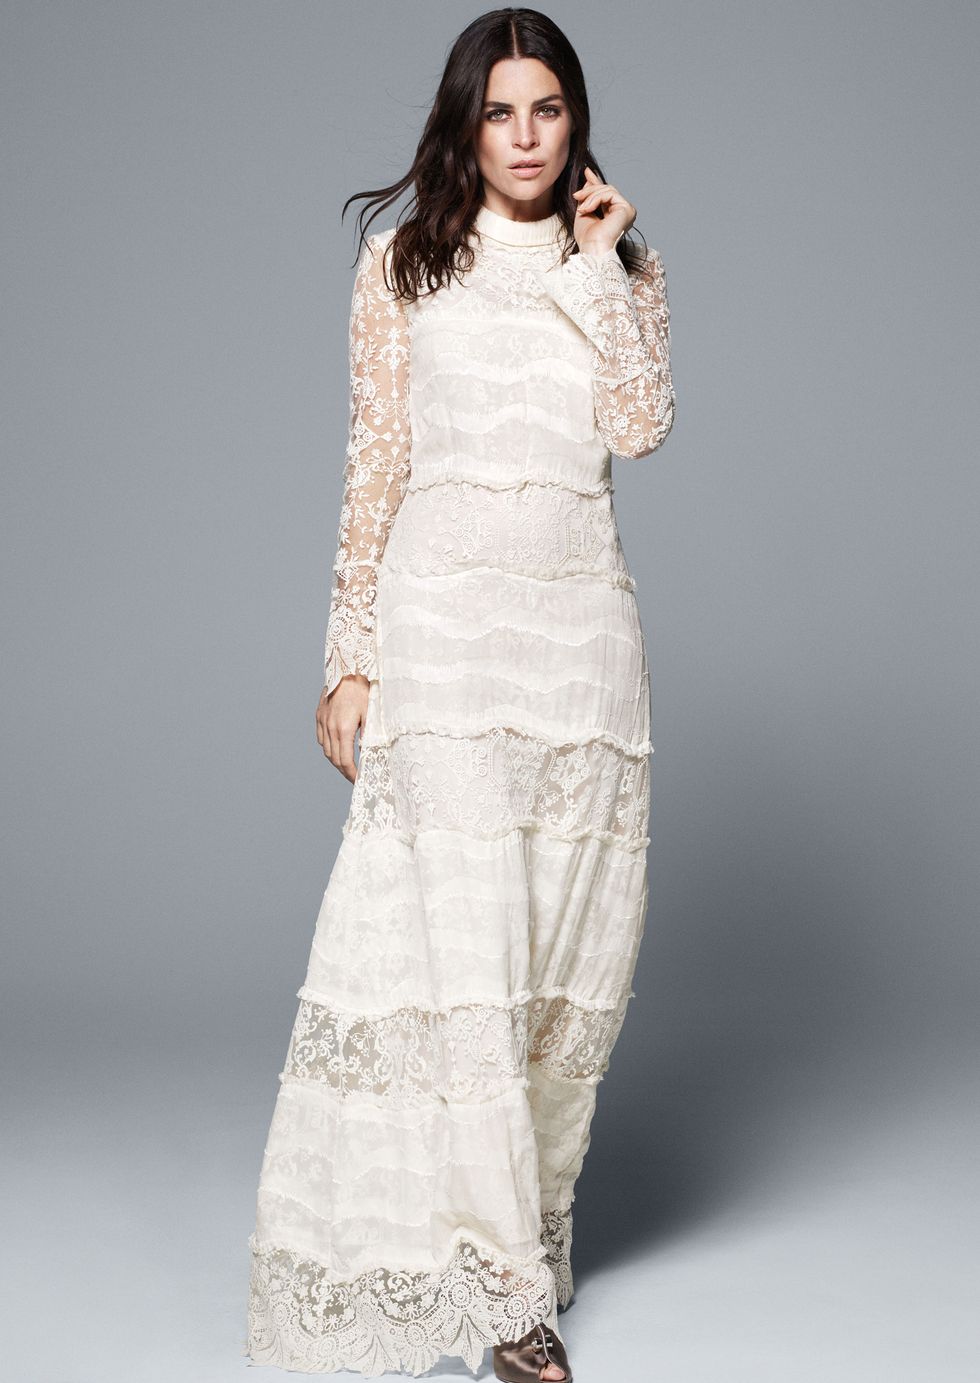 H&M Conscious Collection wedding dress